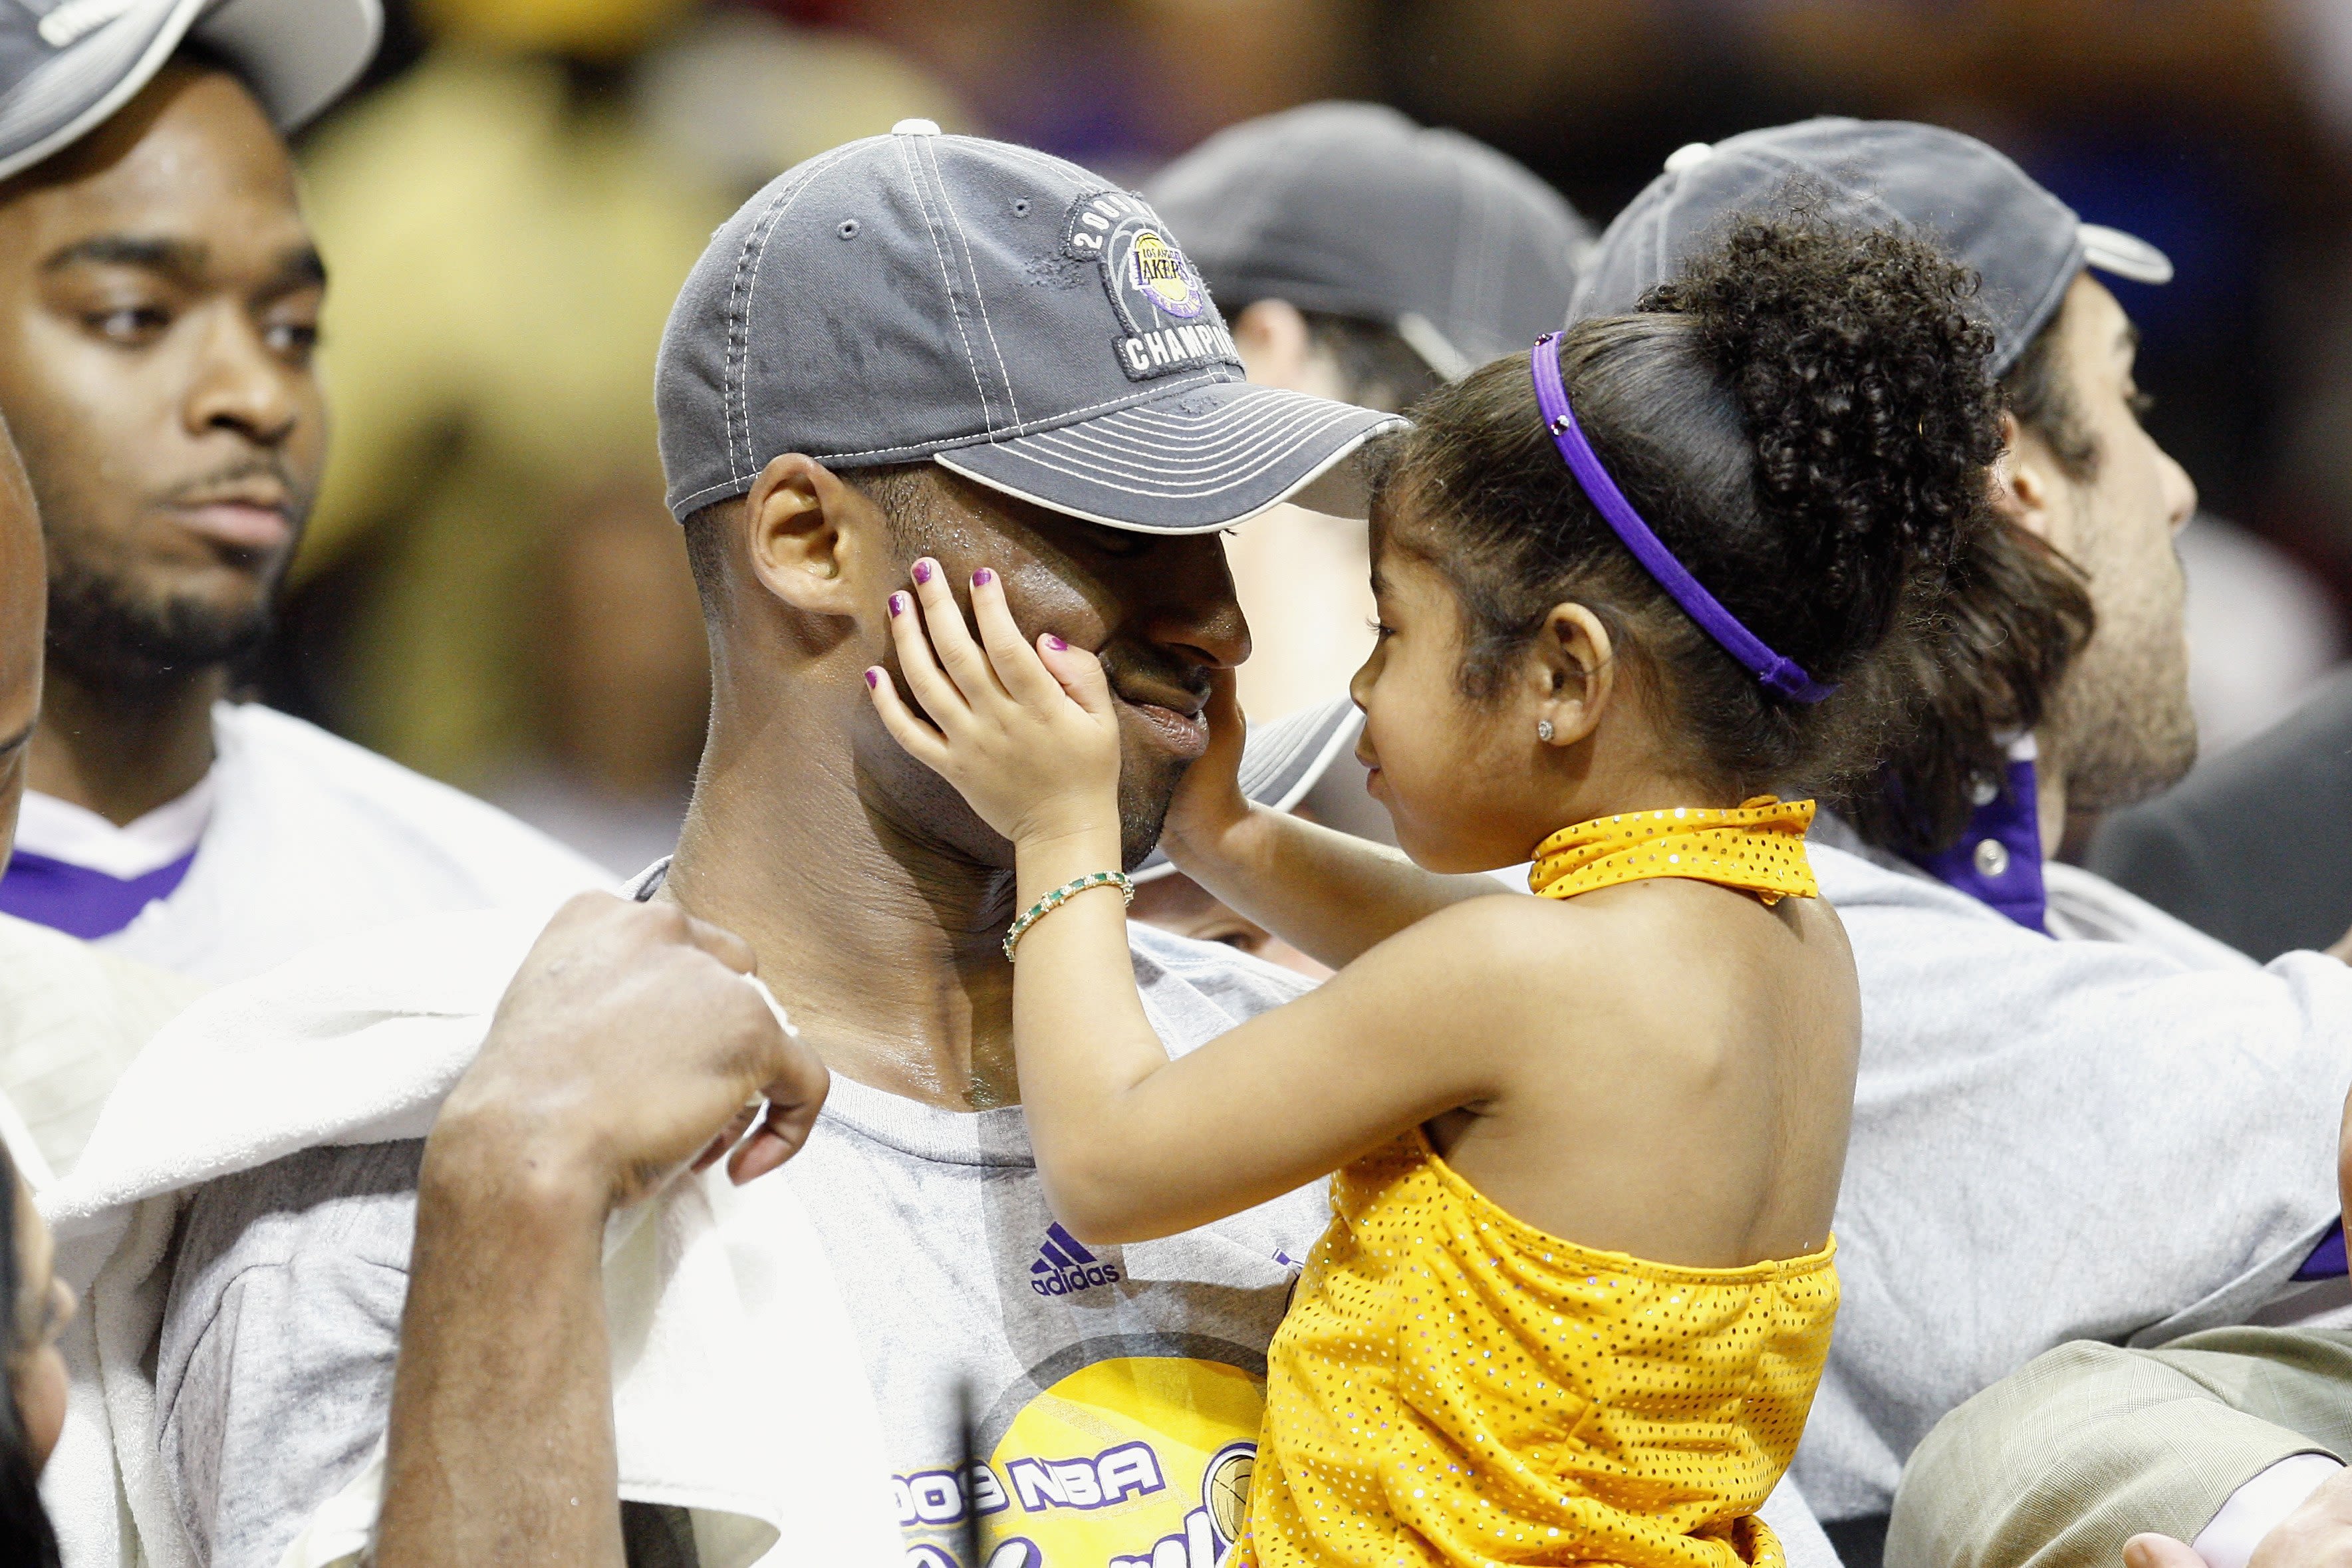 Remembering Kobe Bryant, Daughter Gianna